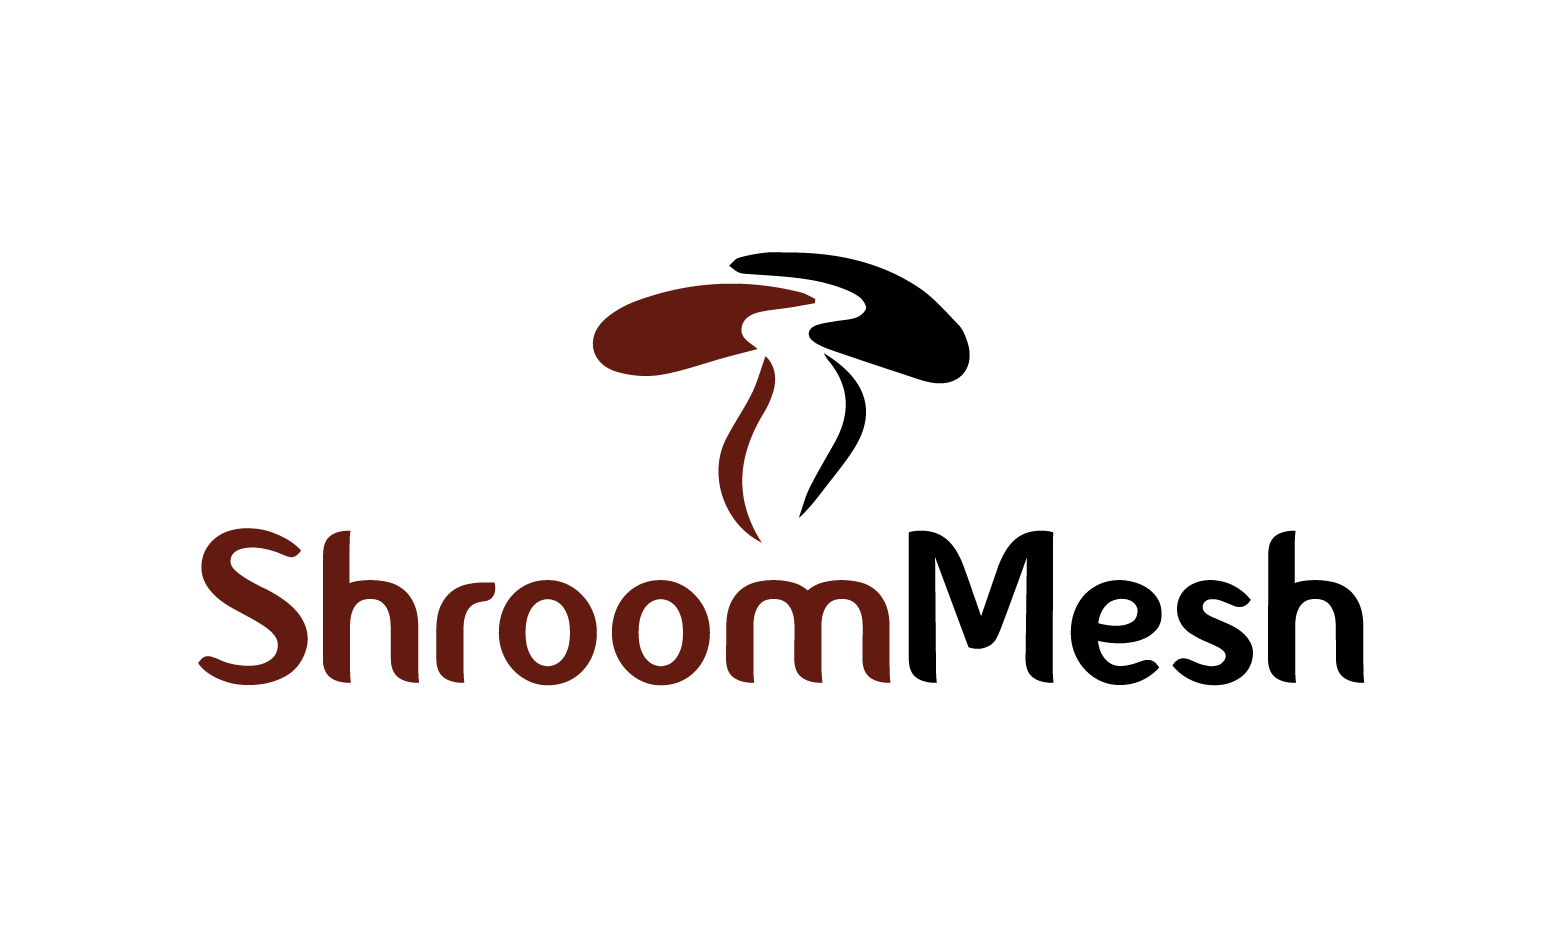 ShroomMesh.com - Creative brandable domain for sale